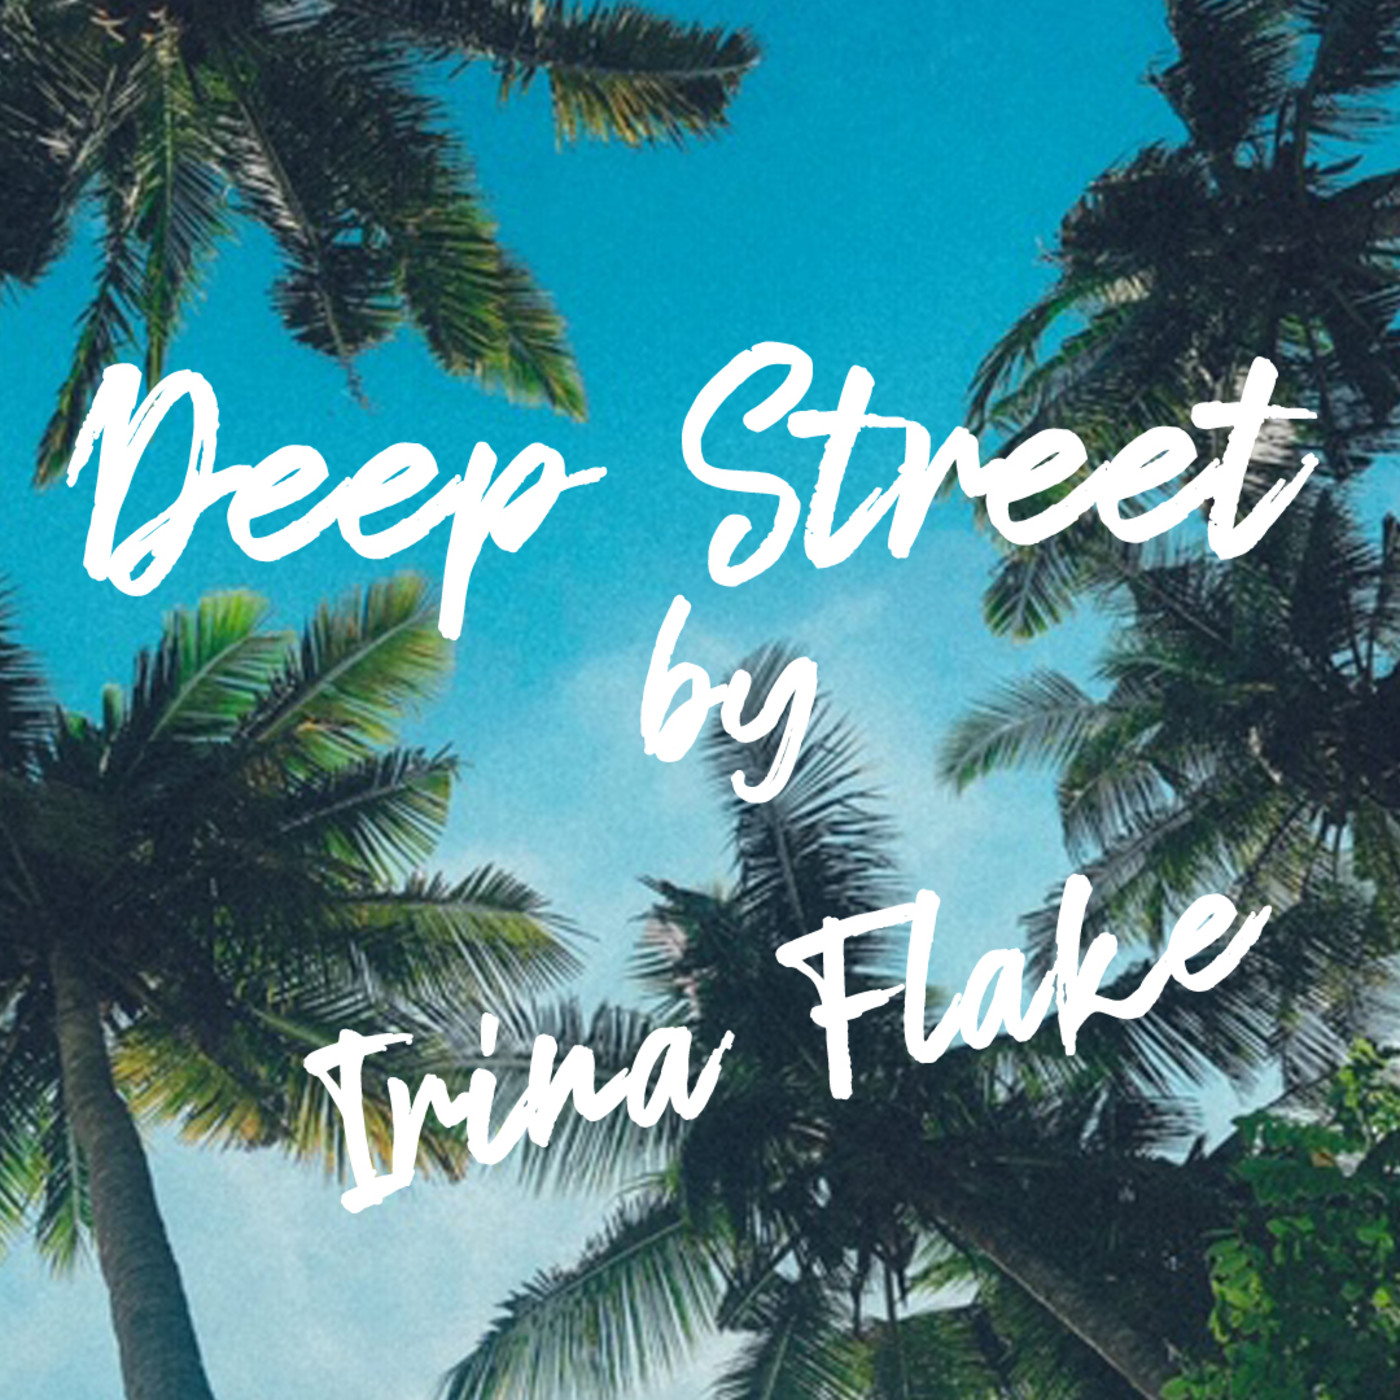 Deep Street by Irina Flake 05 @ Flaix FM 28.04.19